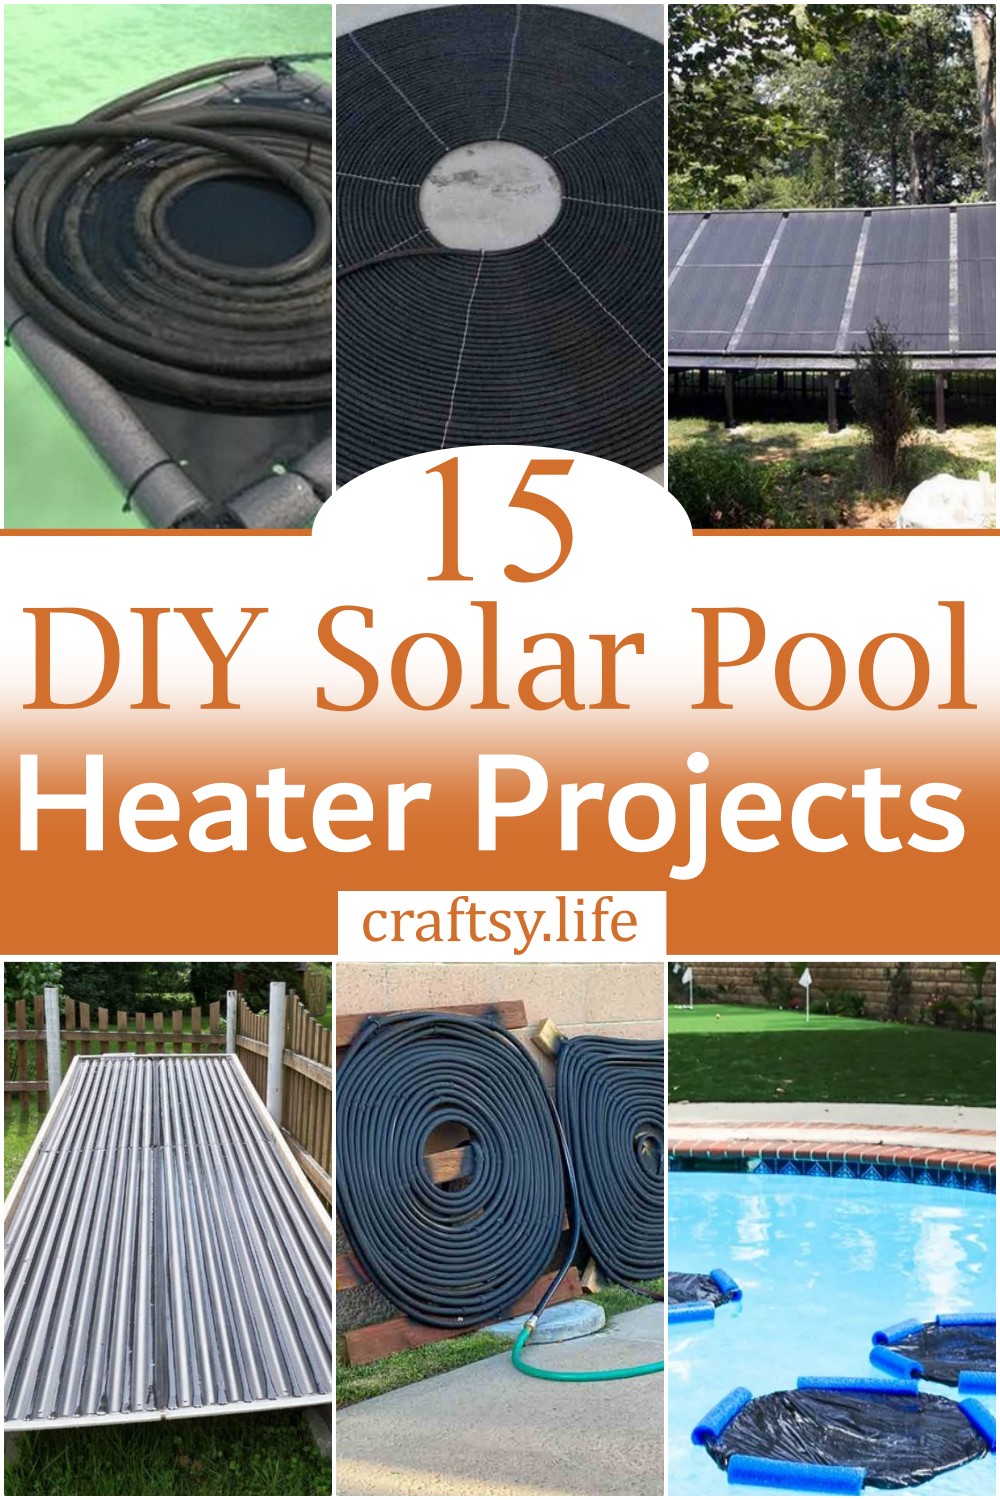 DIY Solar Pool Heater Projects